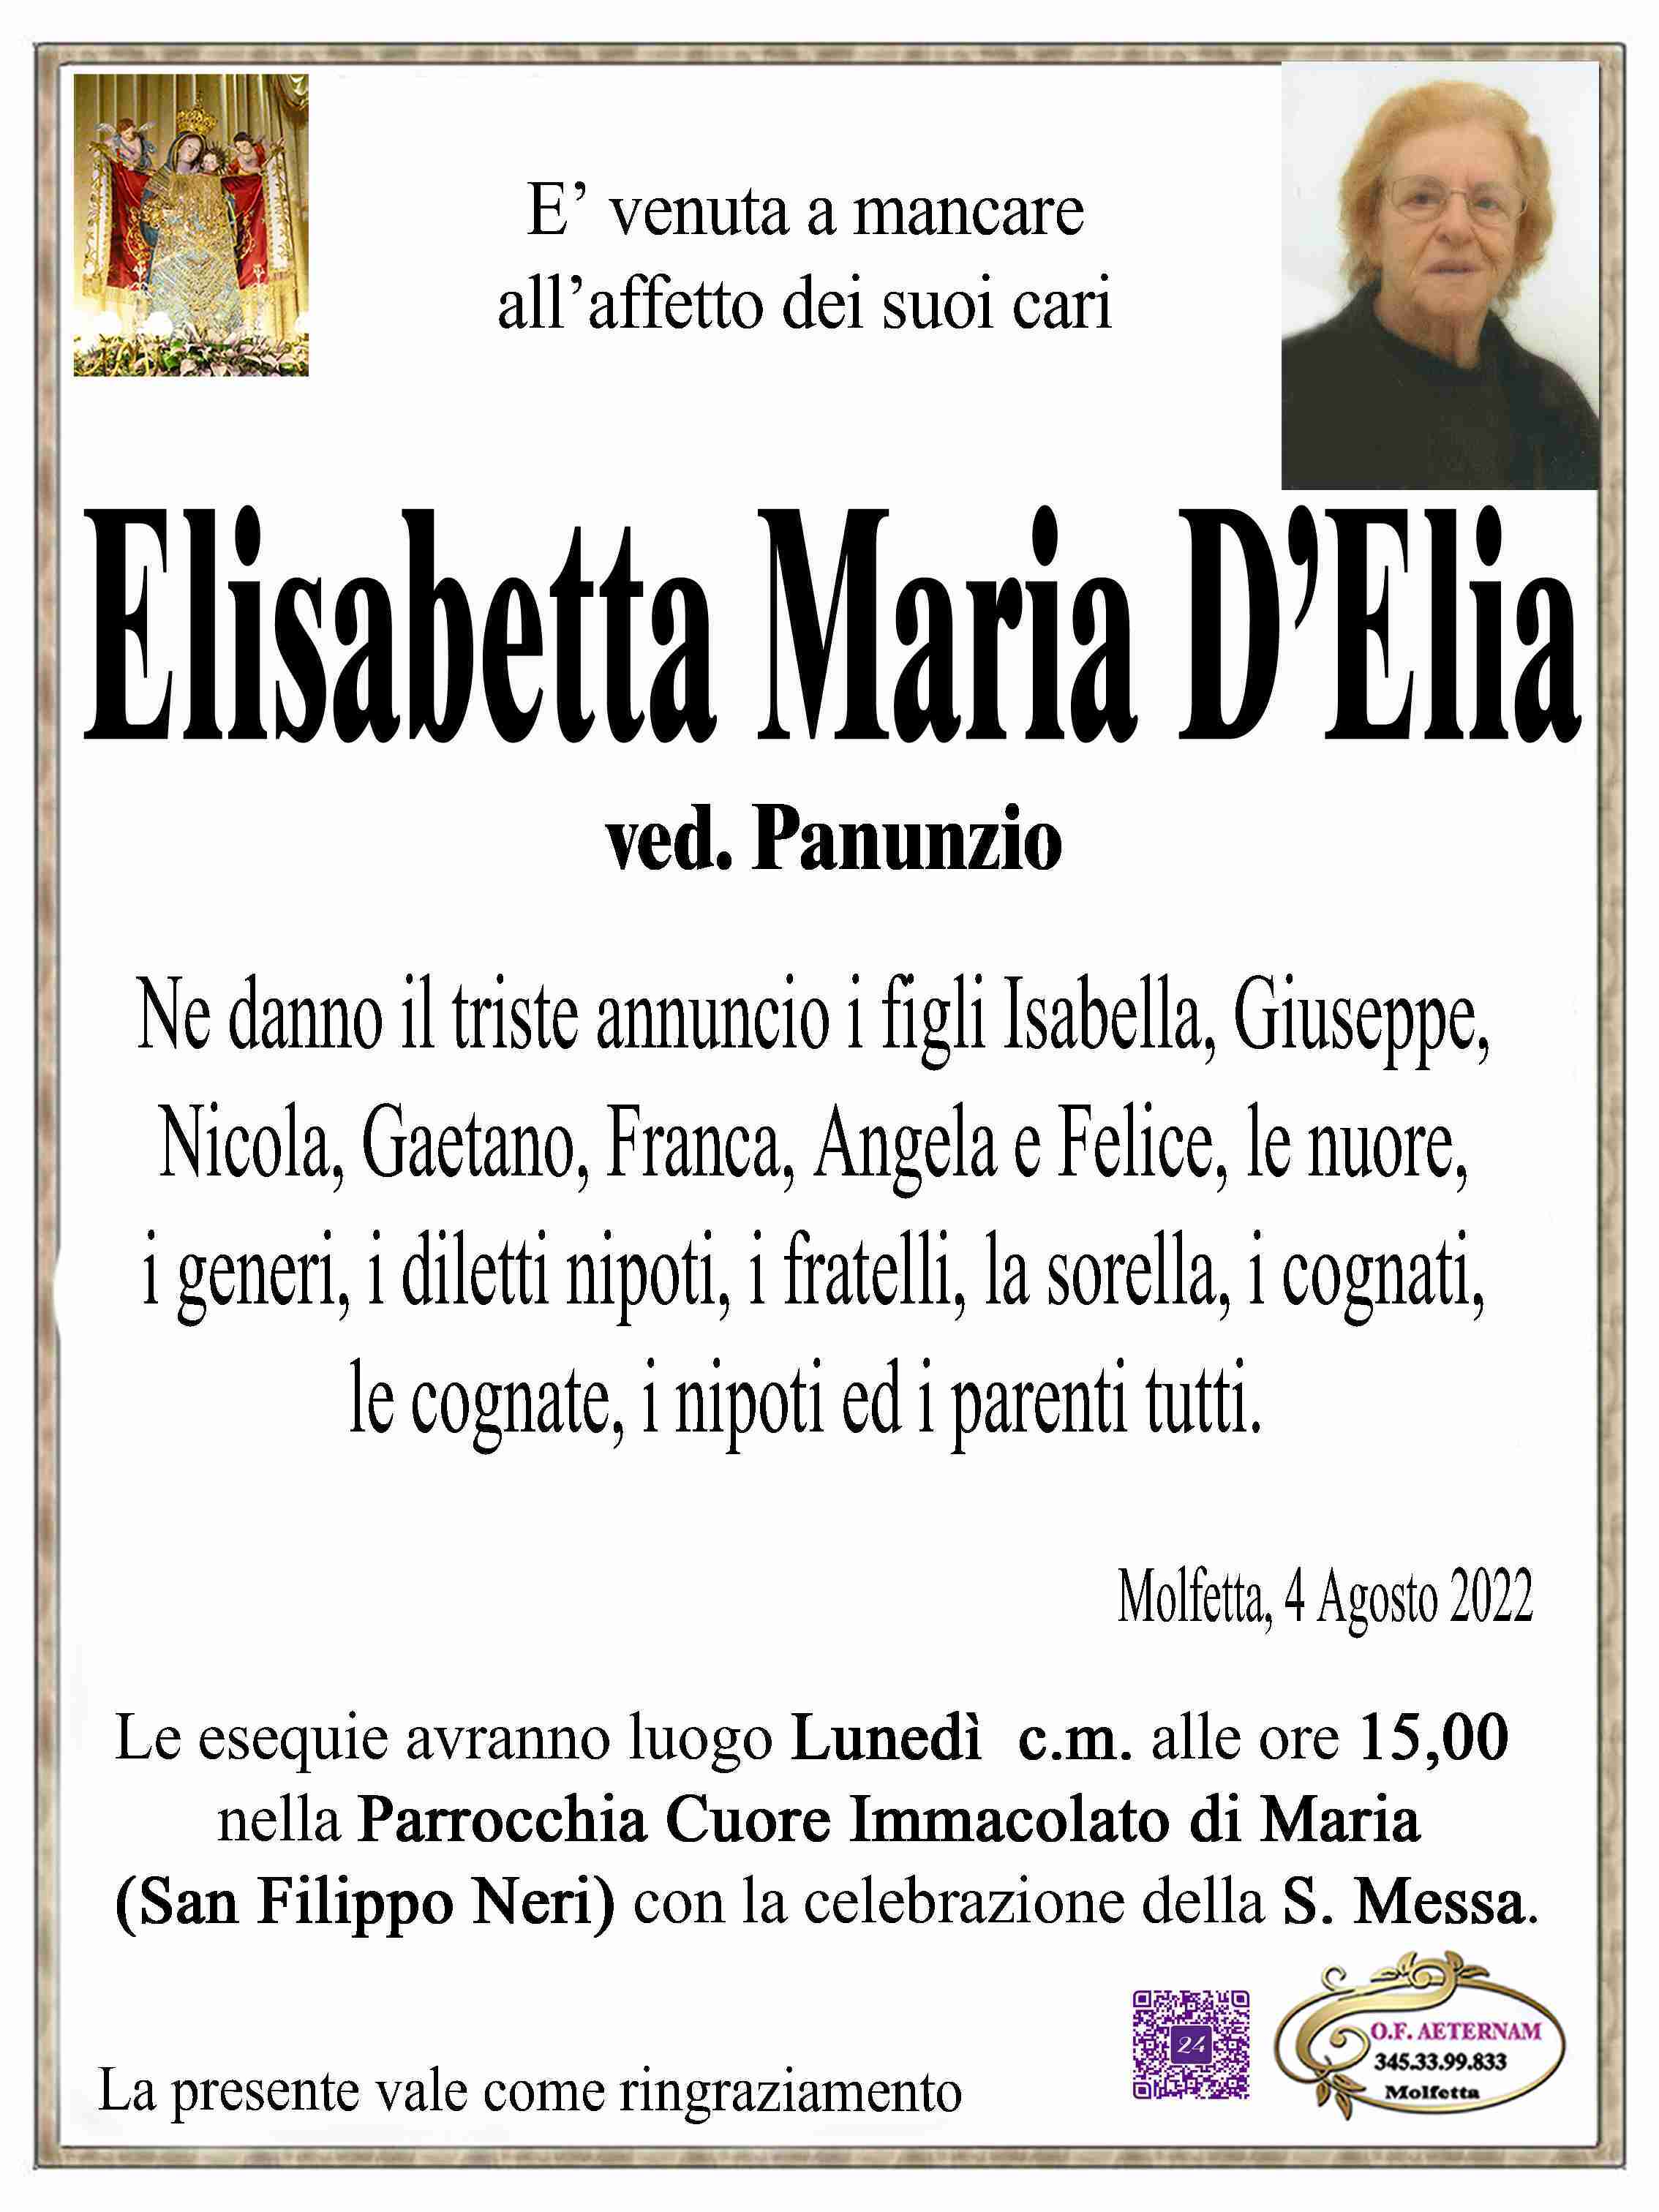 Elisabetta Maria D'Elia